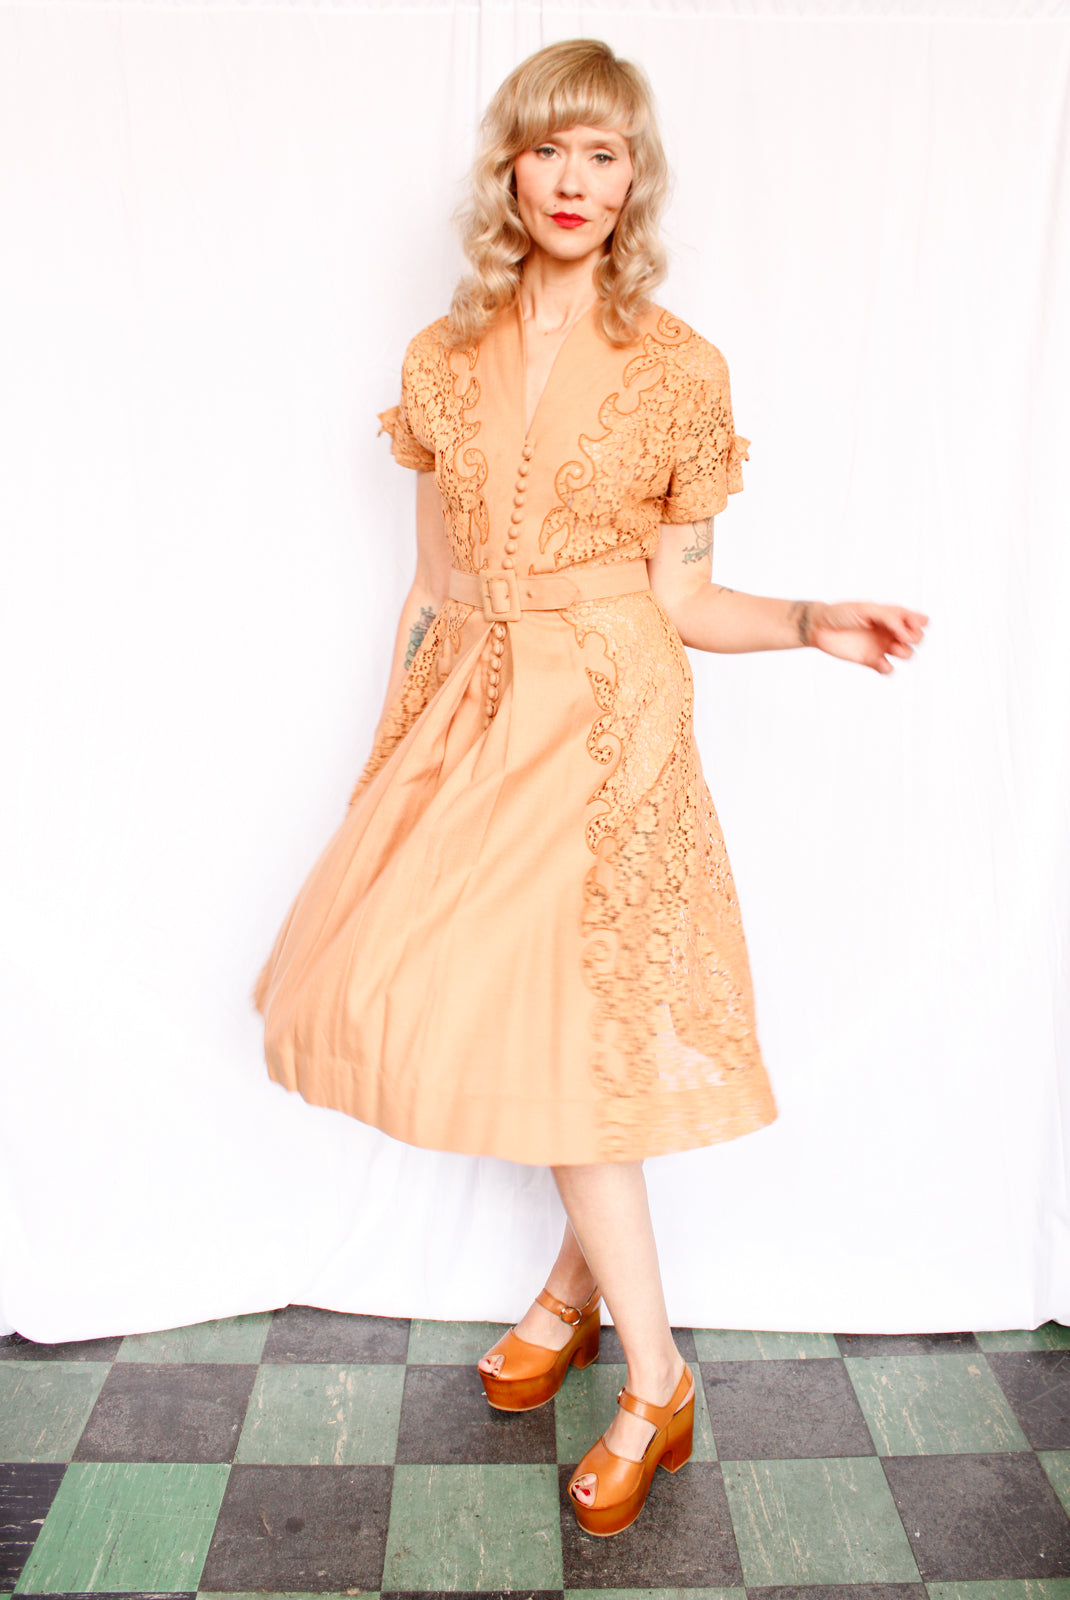 1940s Caramel Linen & Lace Dress - Medium